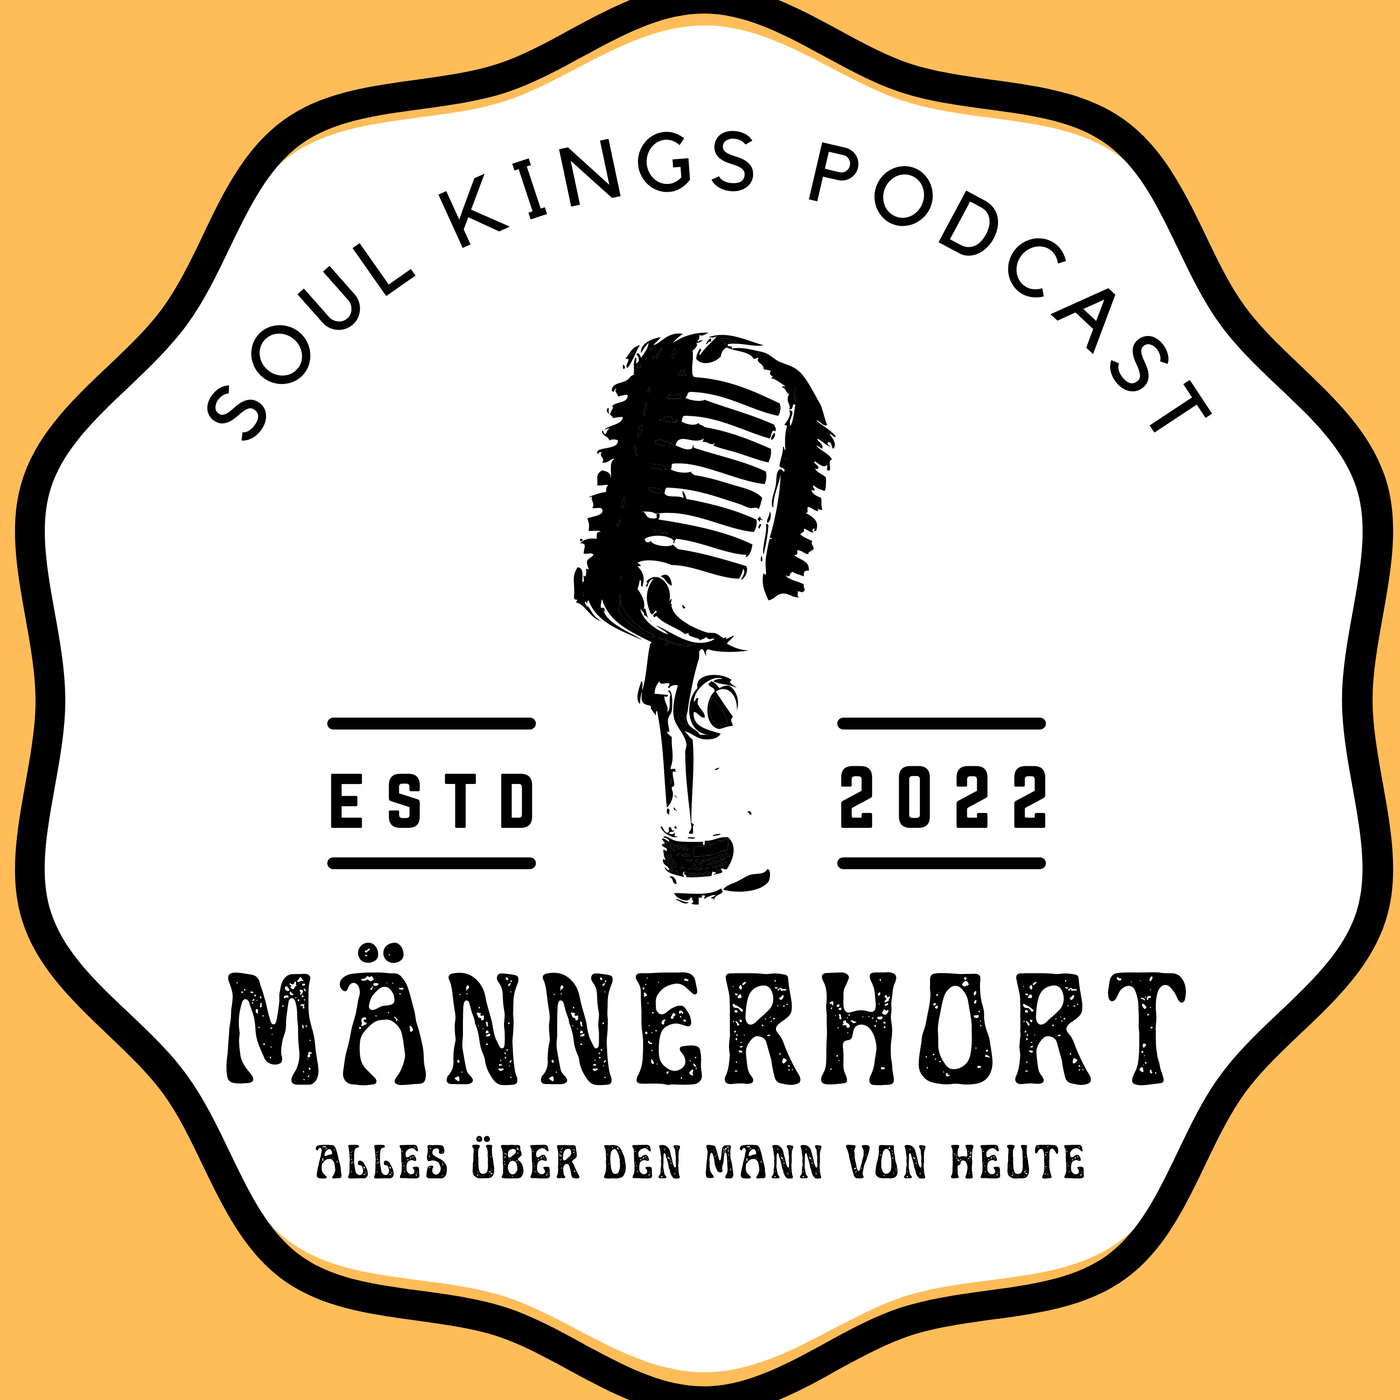 #22 Soul Kings Podcast: unsere Werte als Männer | Rollenbild in der Gesellschaft | Next-steps im Männerhort